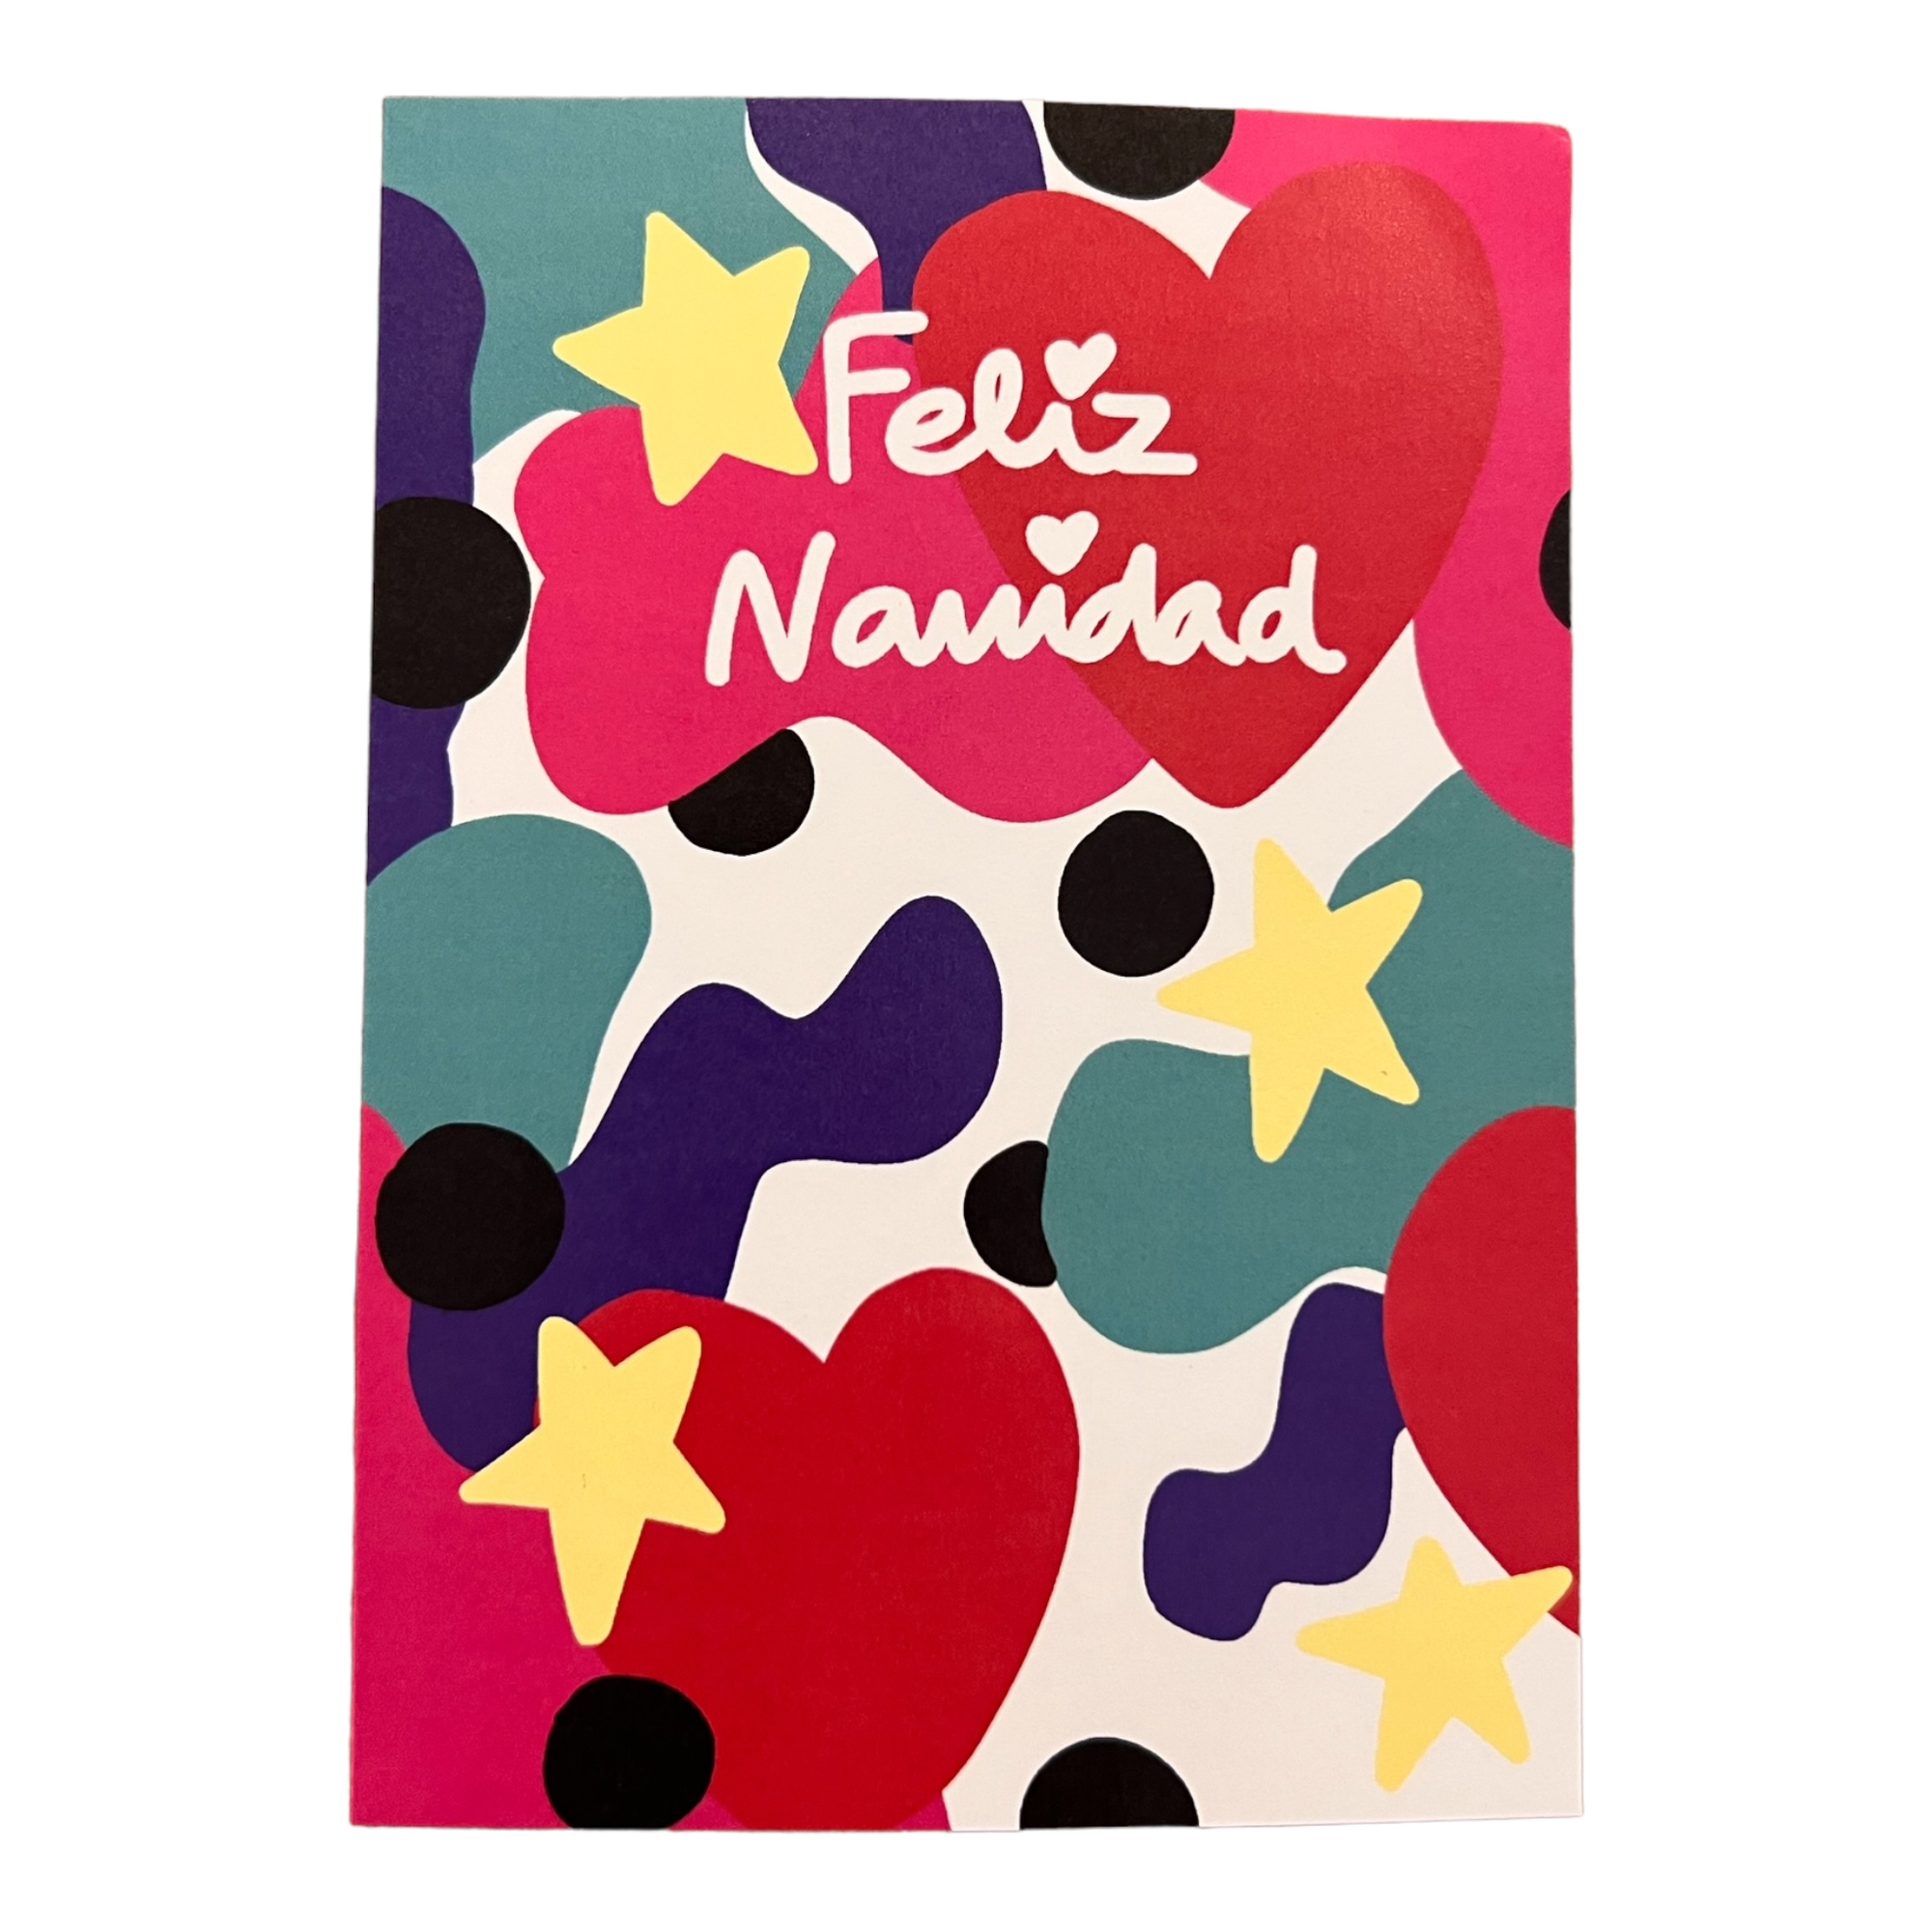 ART CARD "FELIZ NAVIDAD" BY MANDY MOON Club Palma 